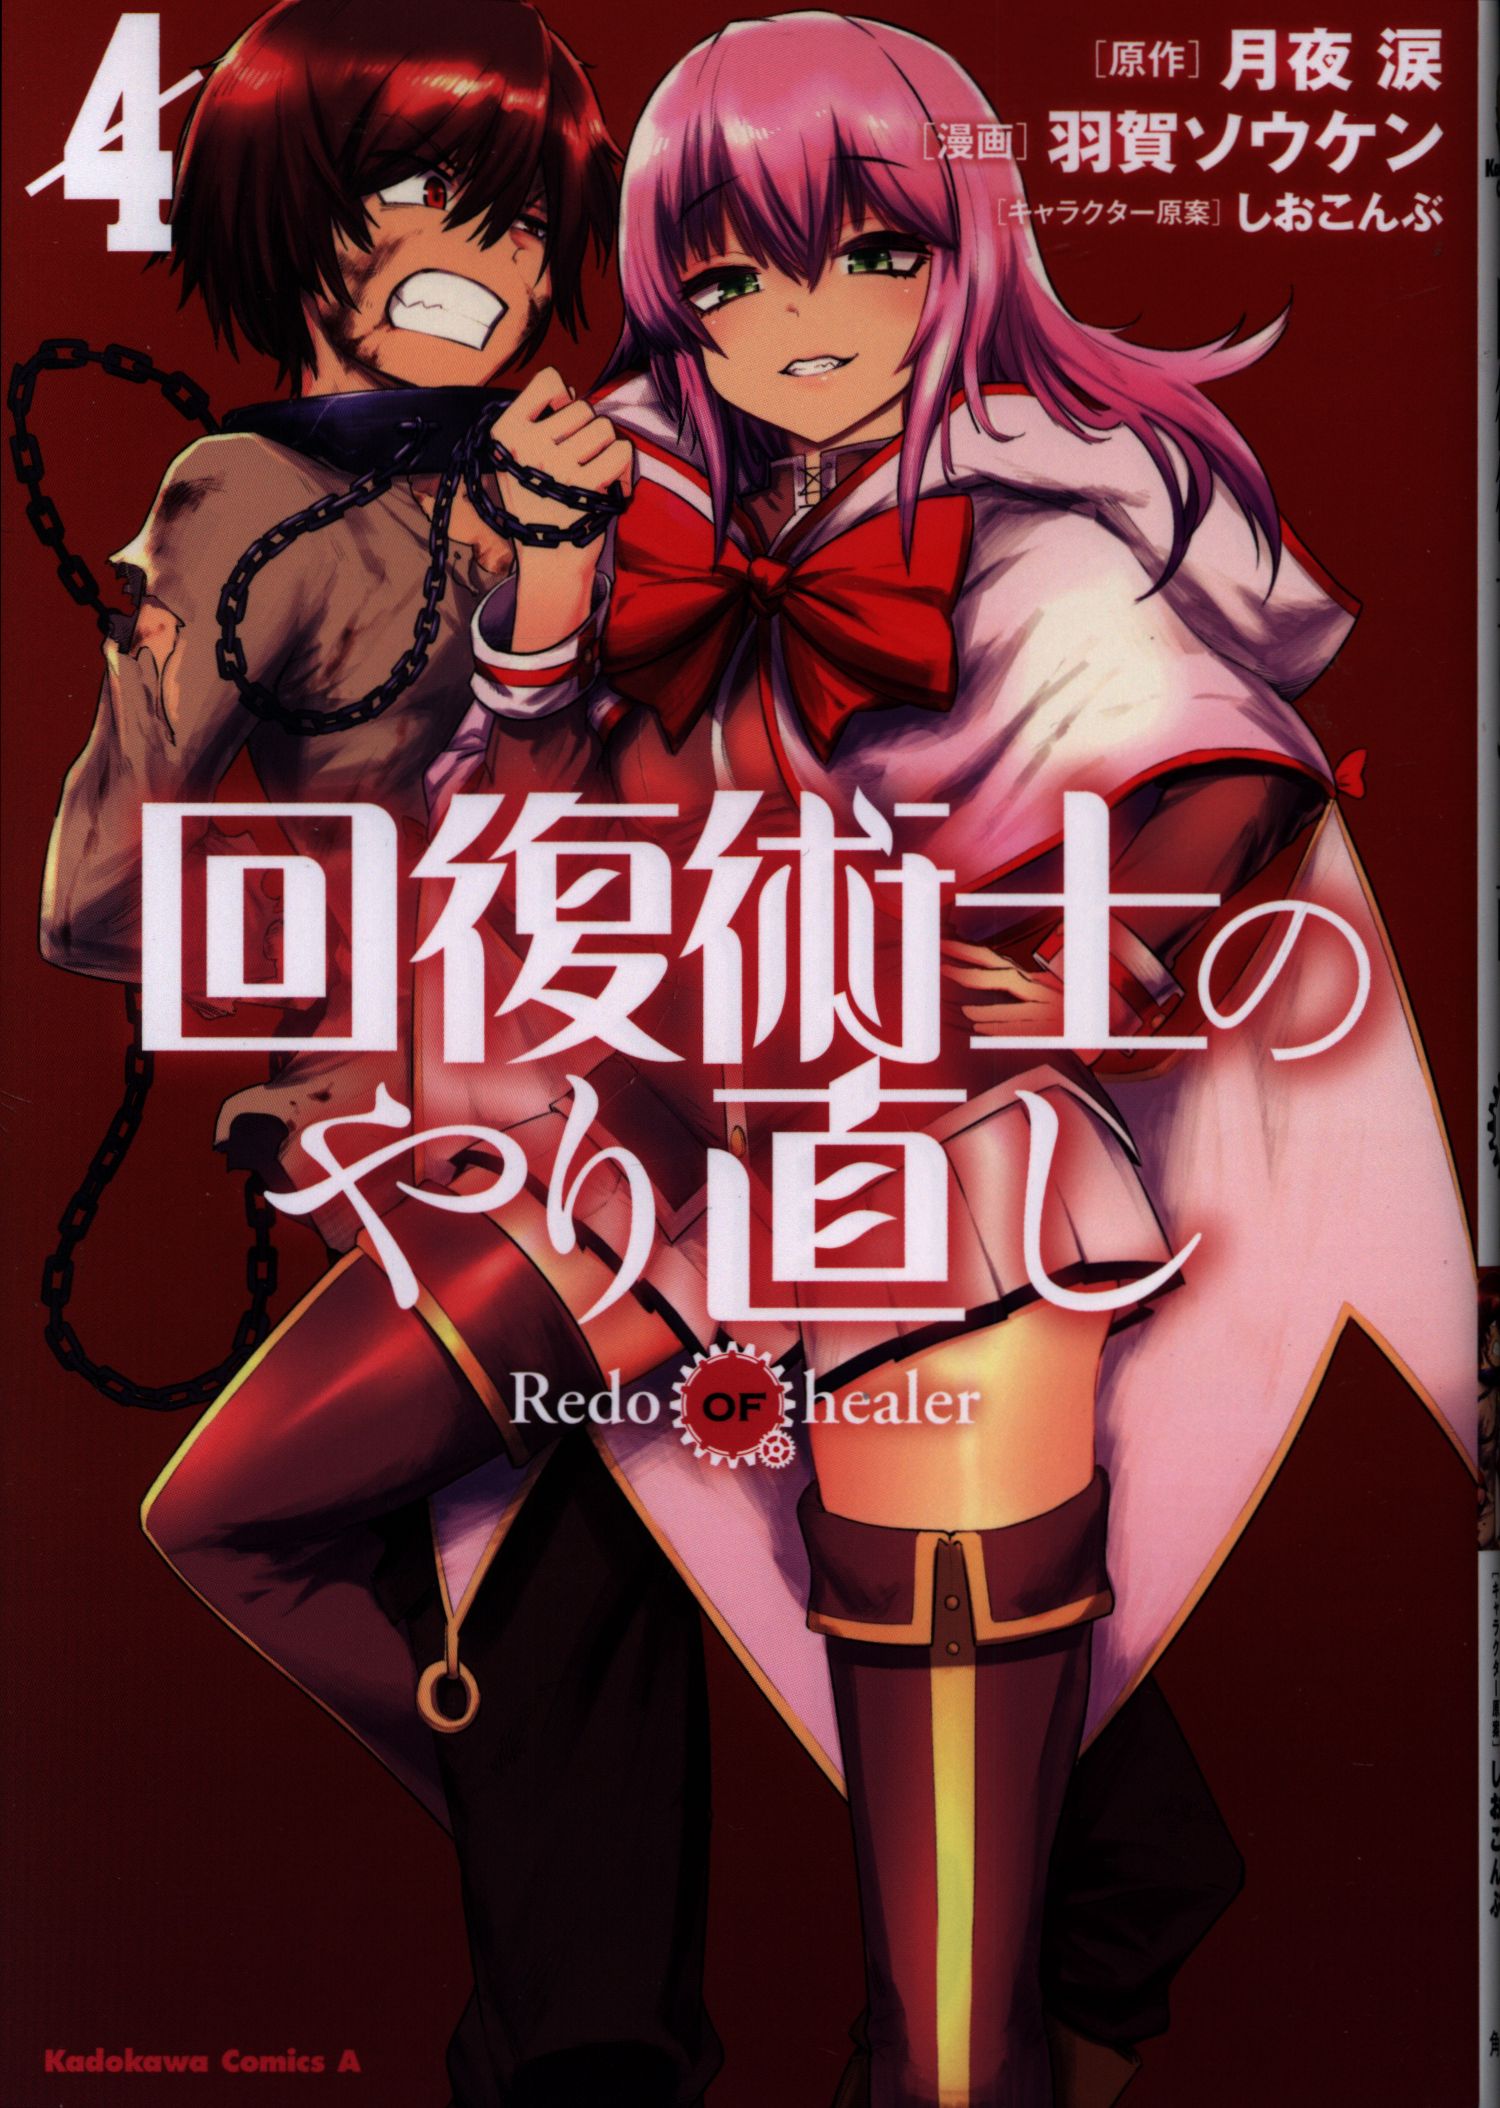 Redo of Healer Vol.3 (Kadokawa Comics Ace) Japanese Language Manga Book  Comic